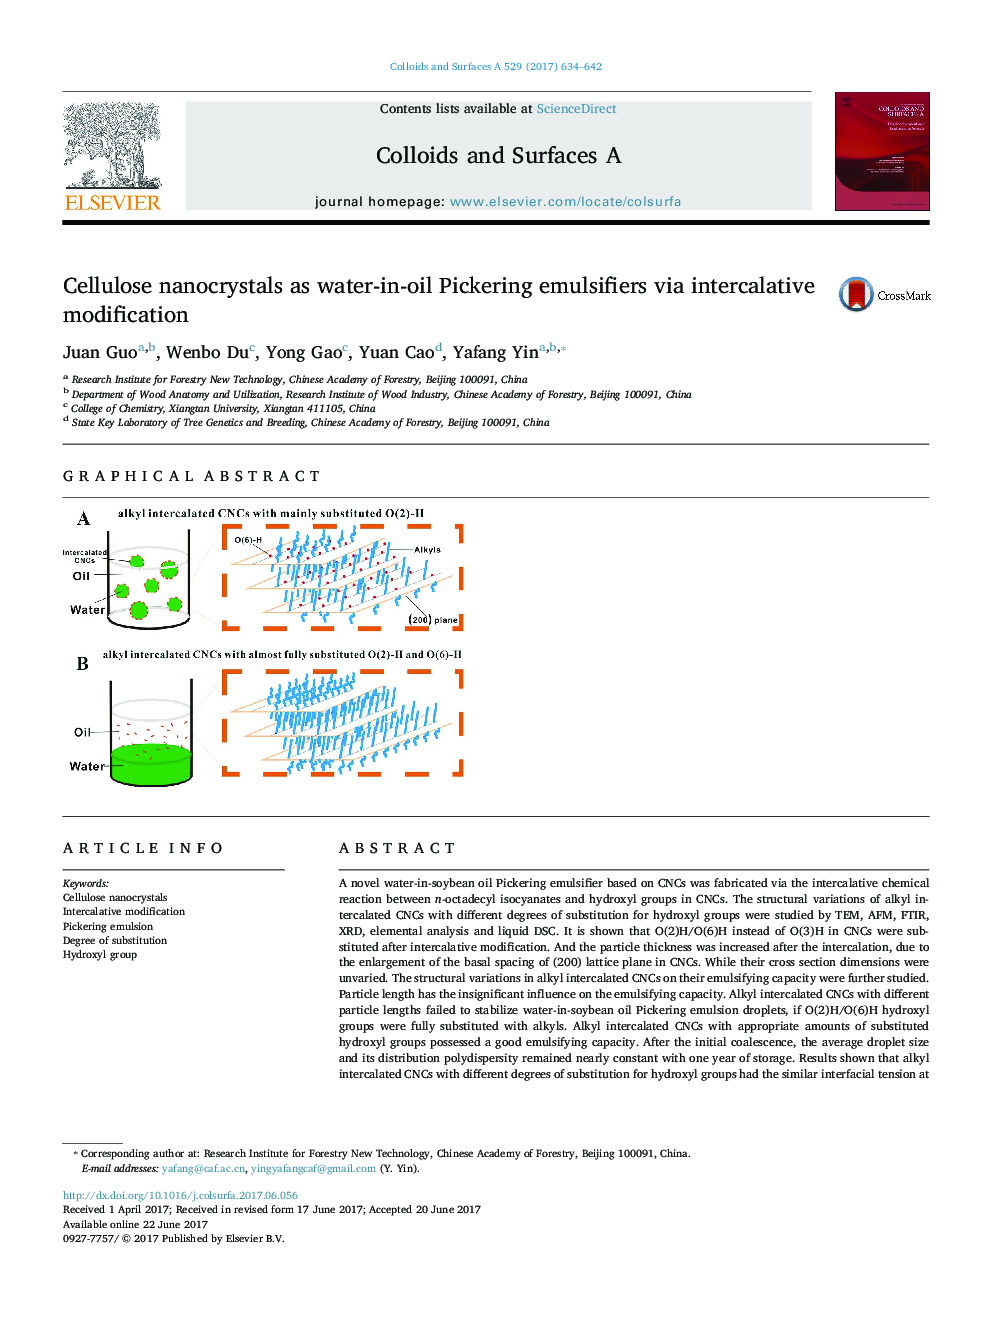 Cellulose nanocrystals as water-in-oil Pickering emulsifiers via intercalative modification